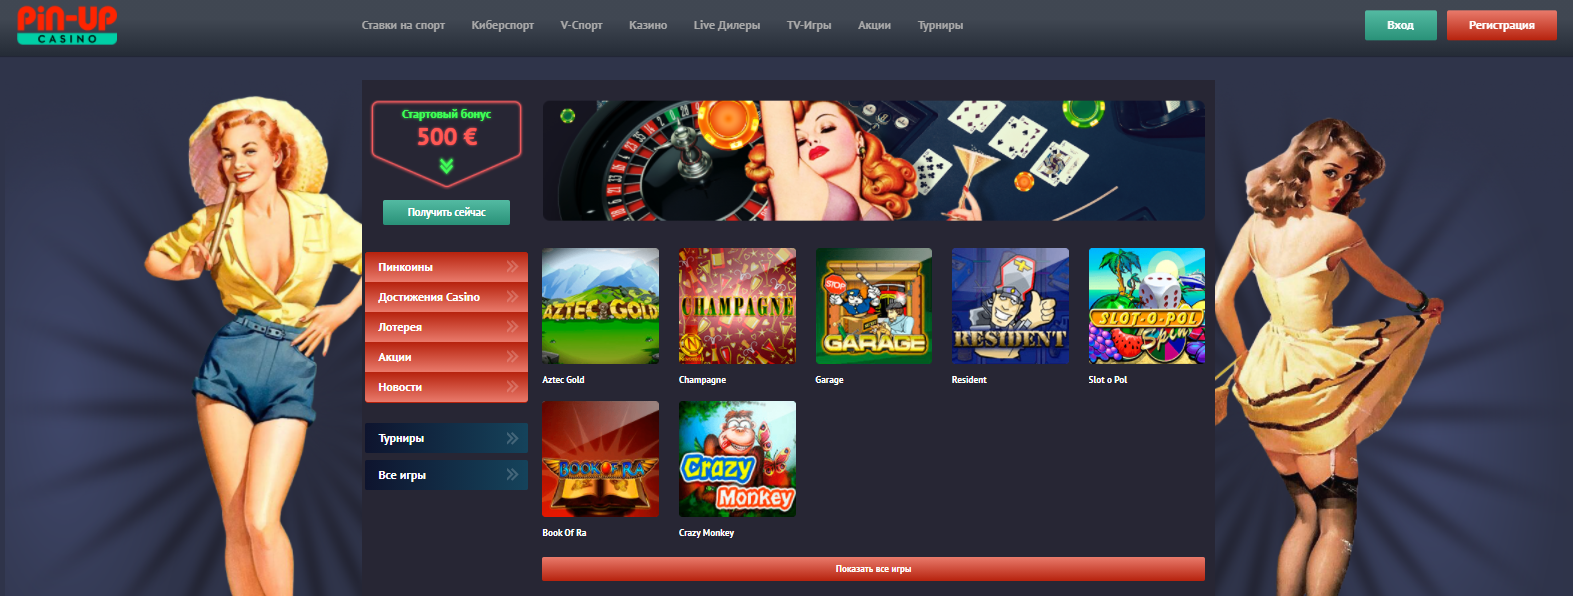 пин ап бездепозитный casino pinup site online